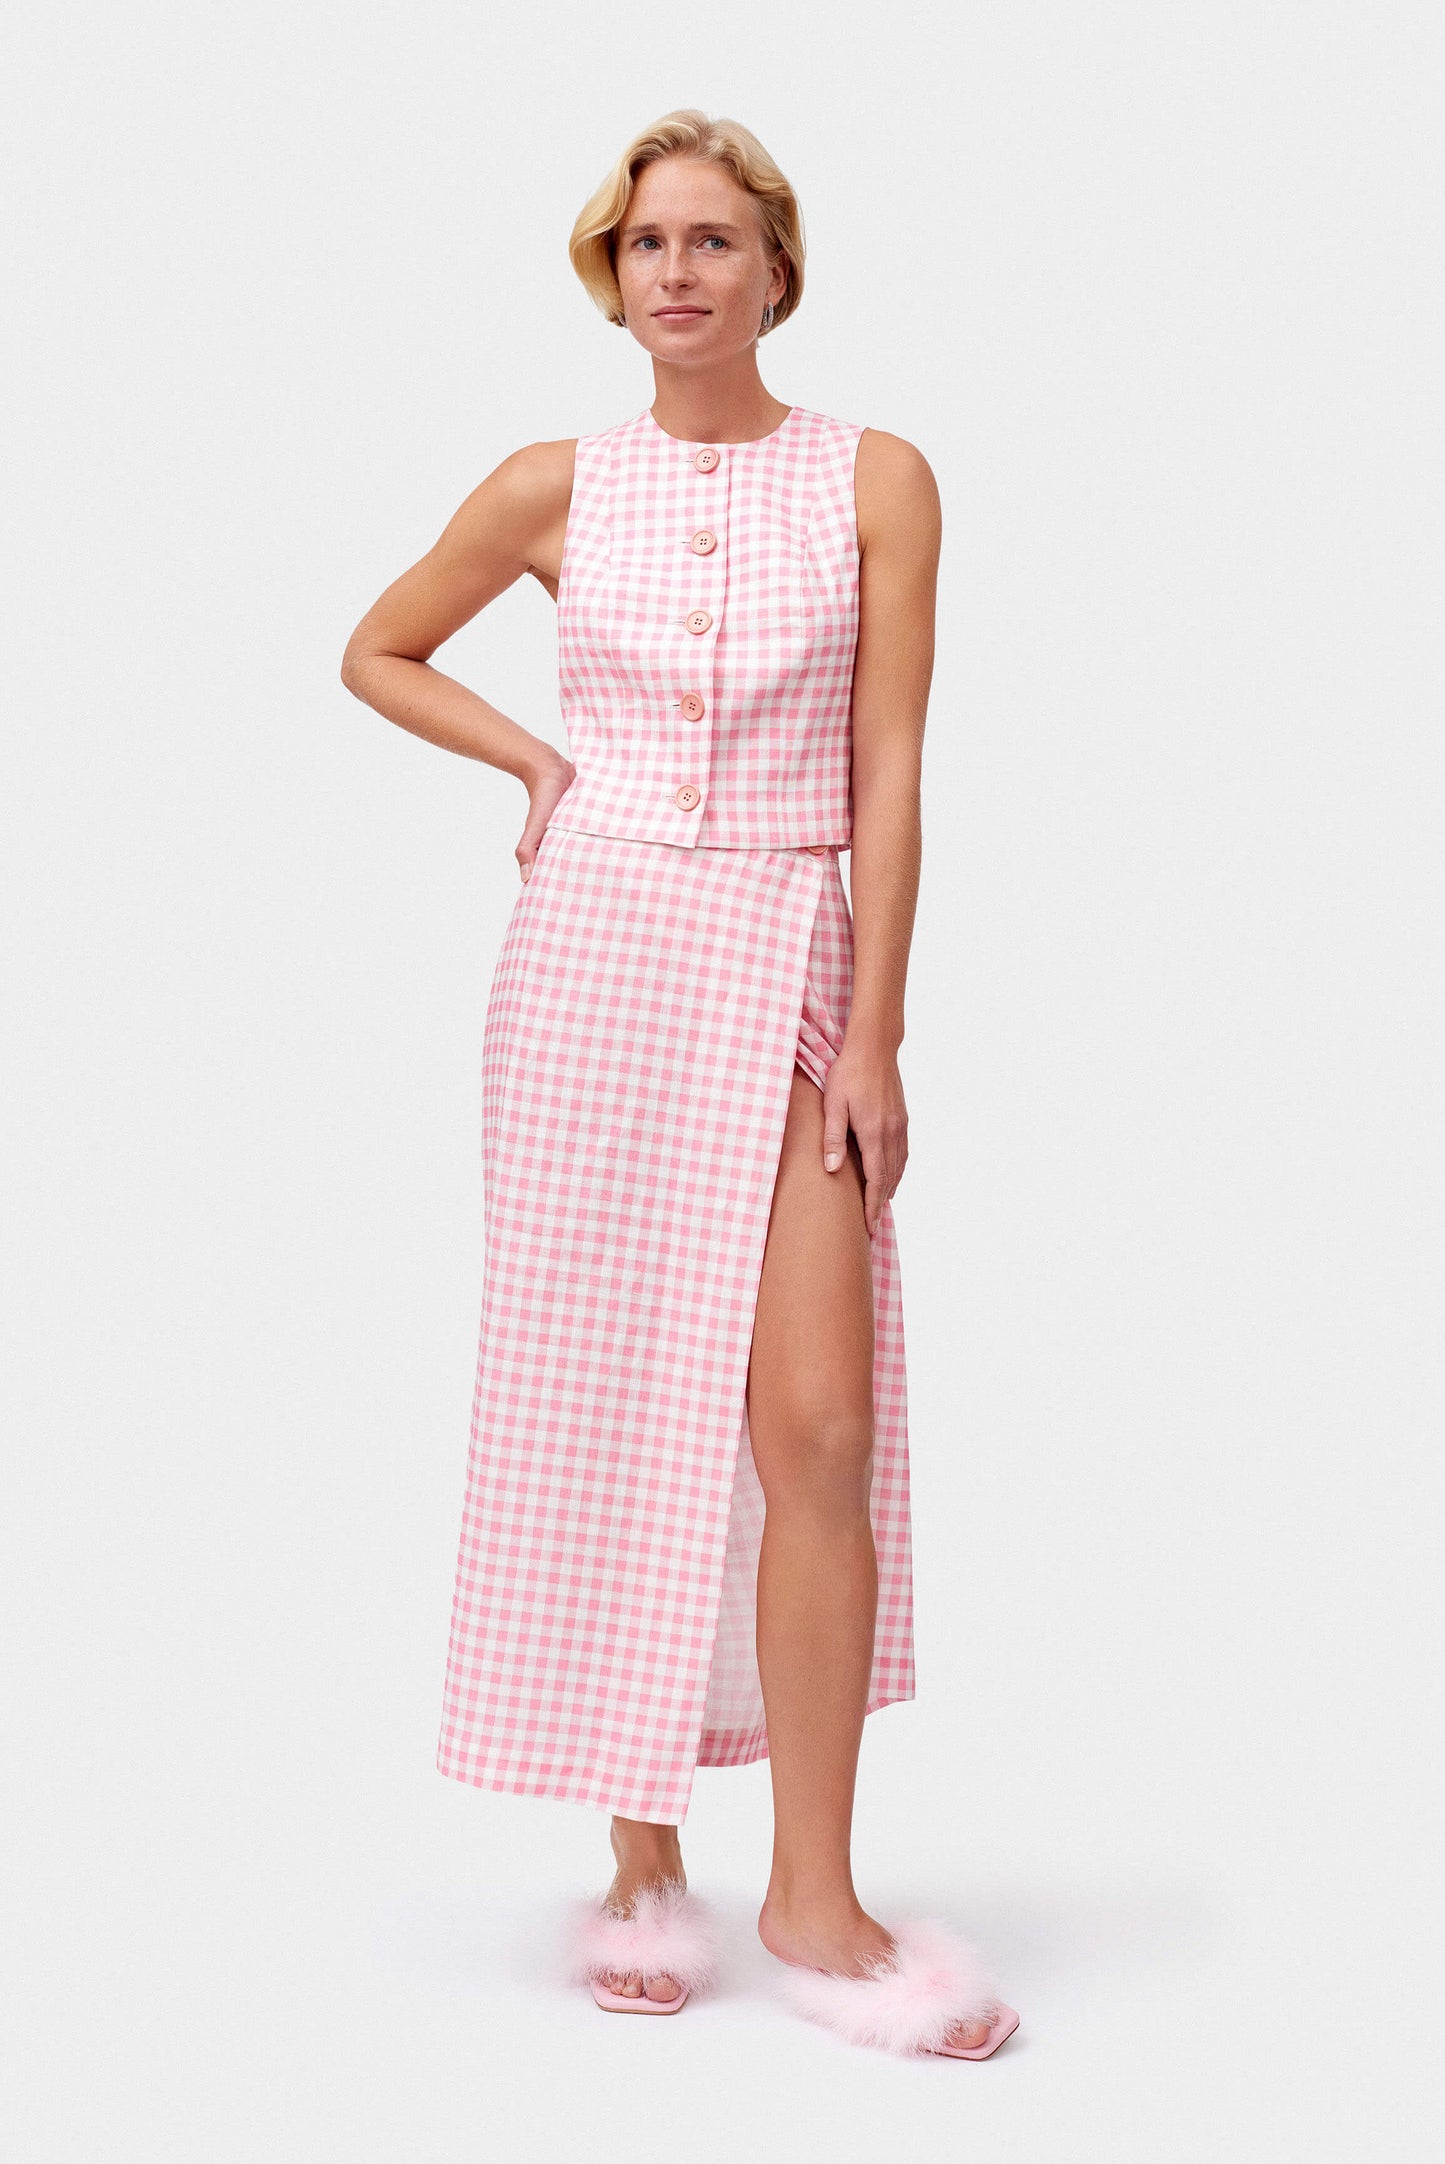 Lili Marleen Skirt in Pink Vichy